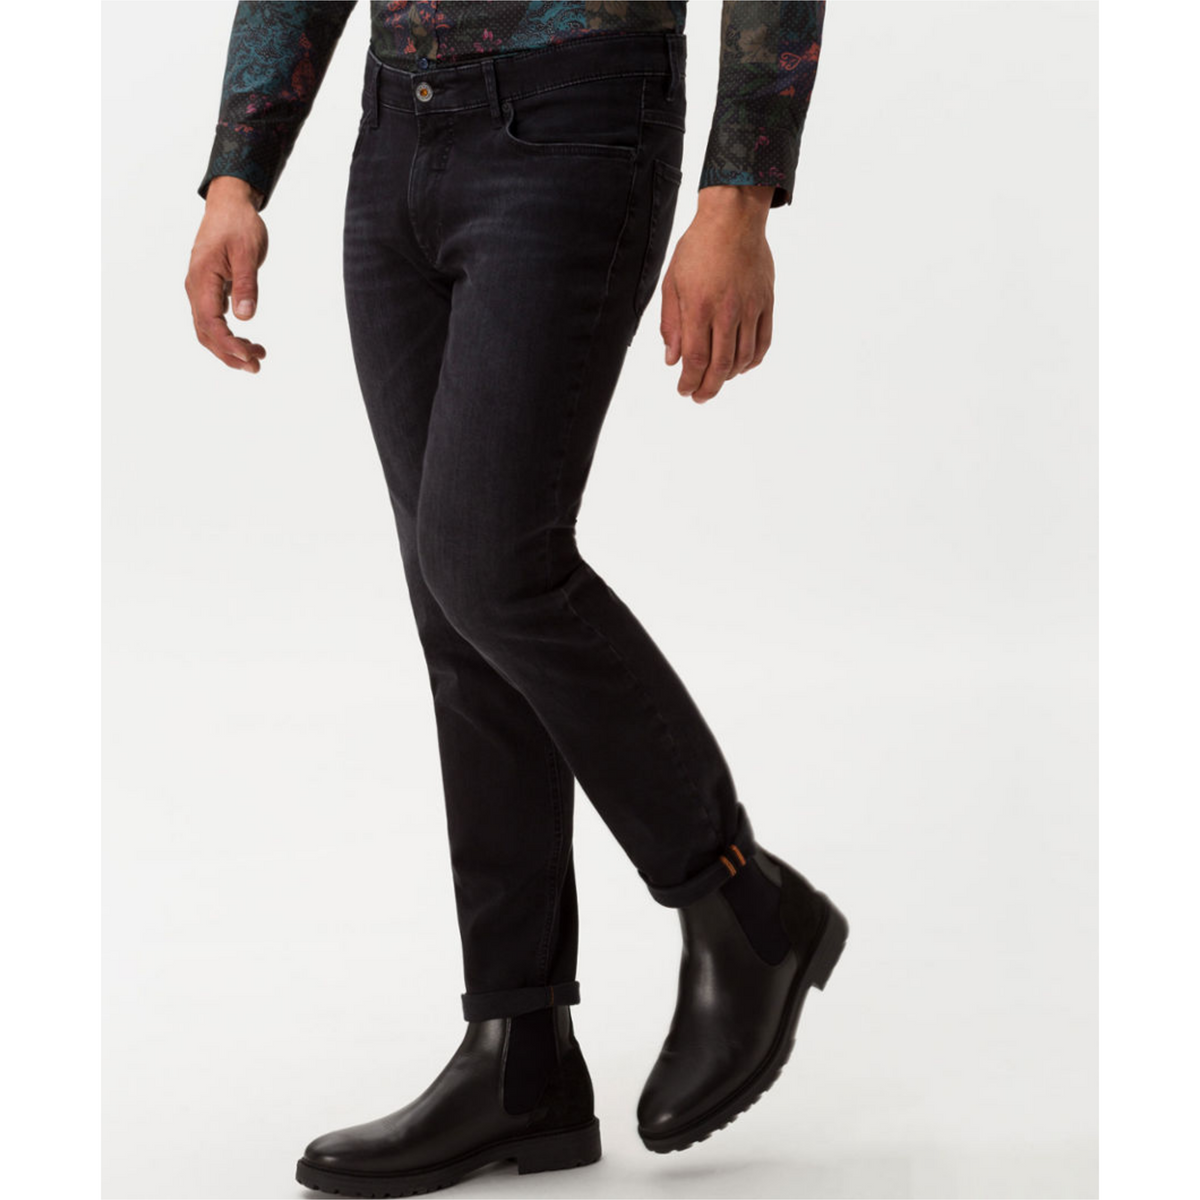 fit Boosted Super Jeans C– Stretchy Jepsons Brax Denim Five-pocket 85-6307 Slim